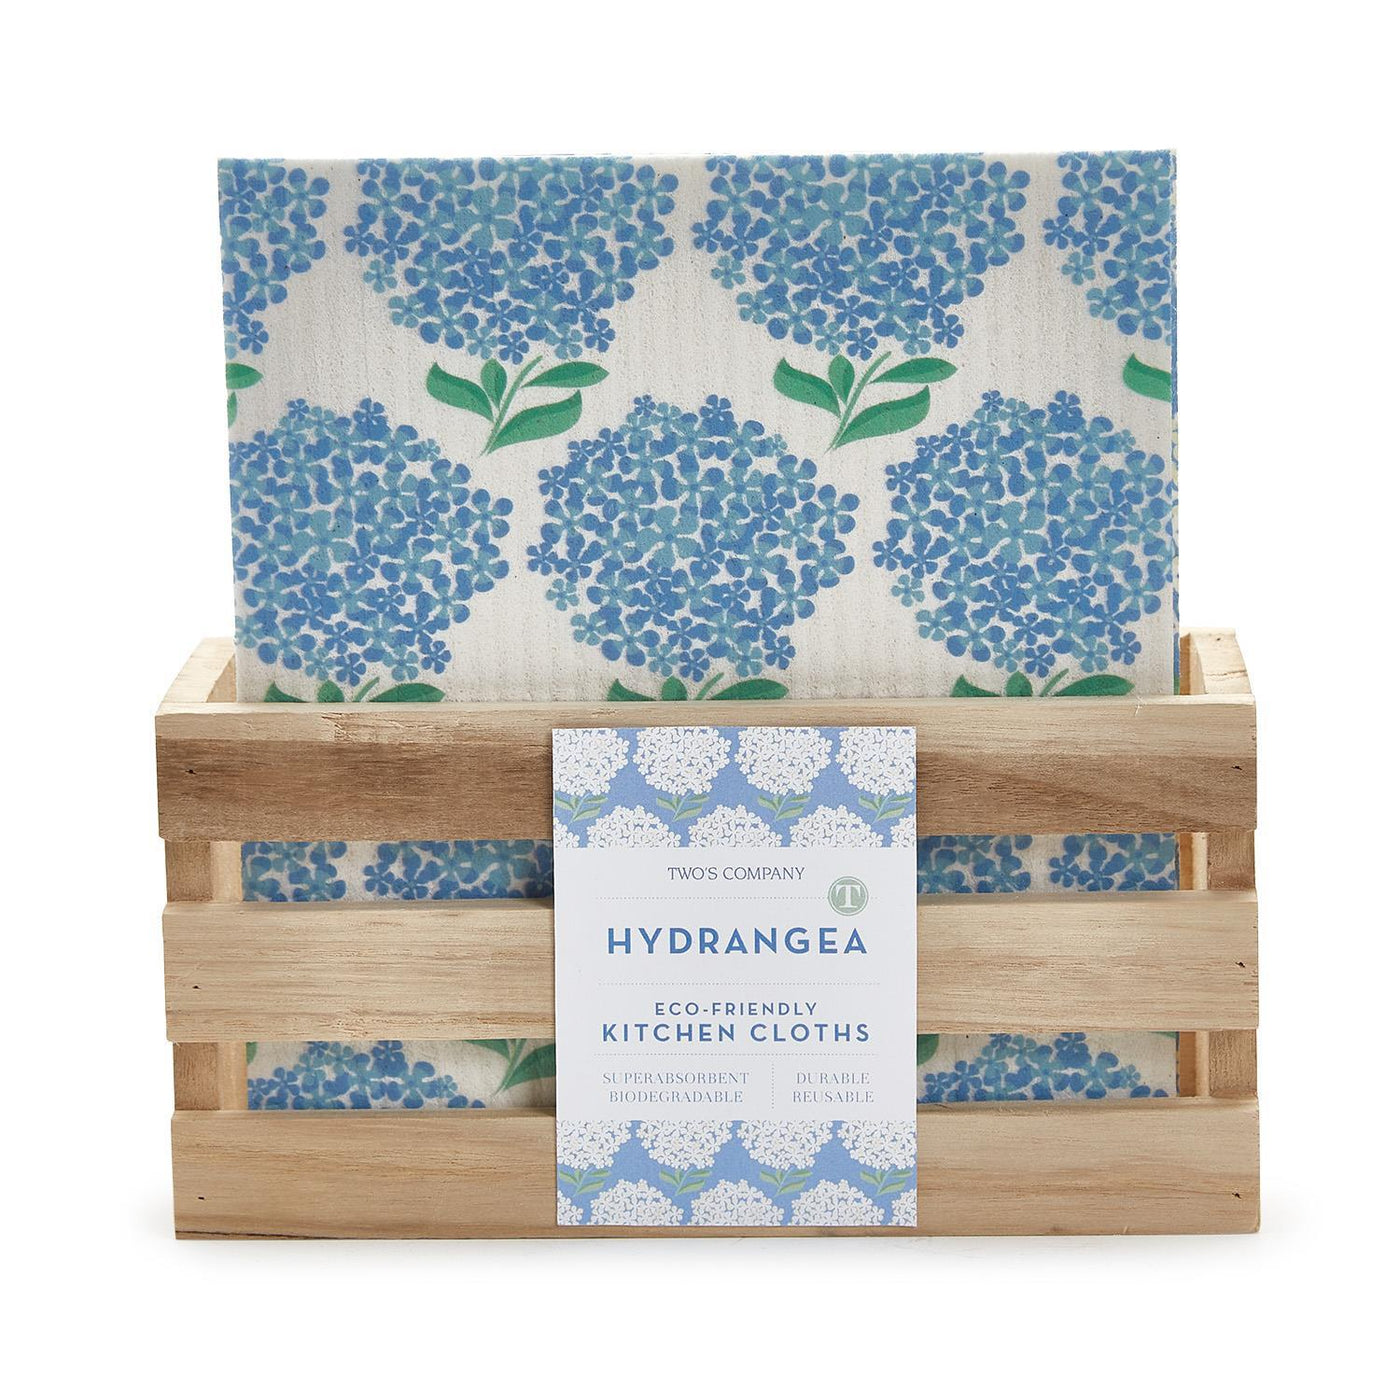 Hydrangea Biodegradable Kitchen Cloth